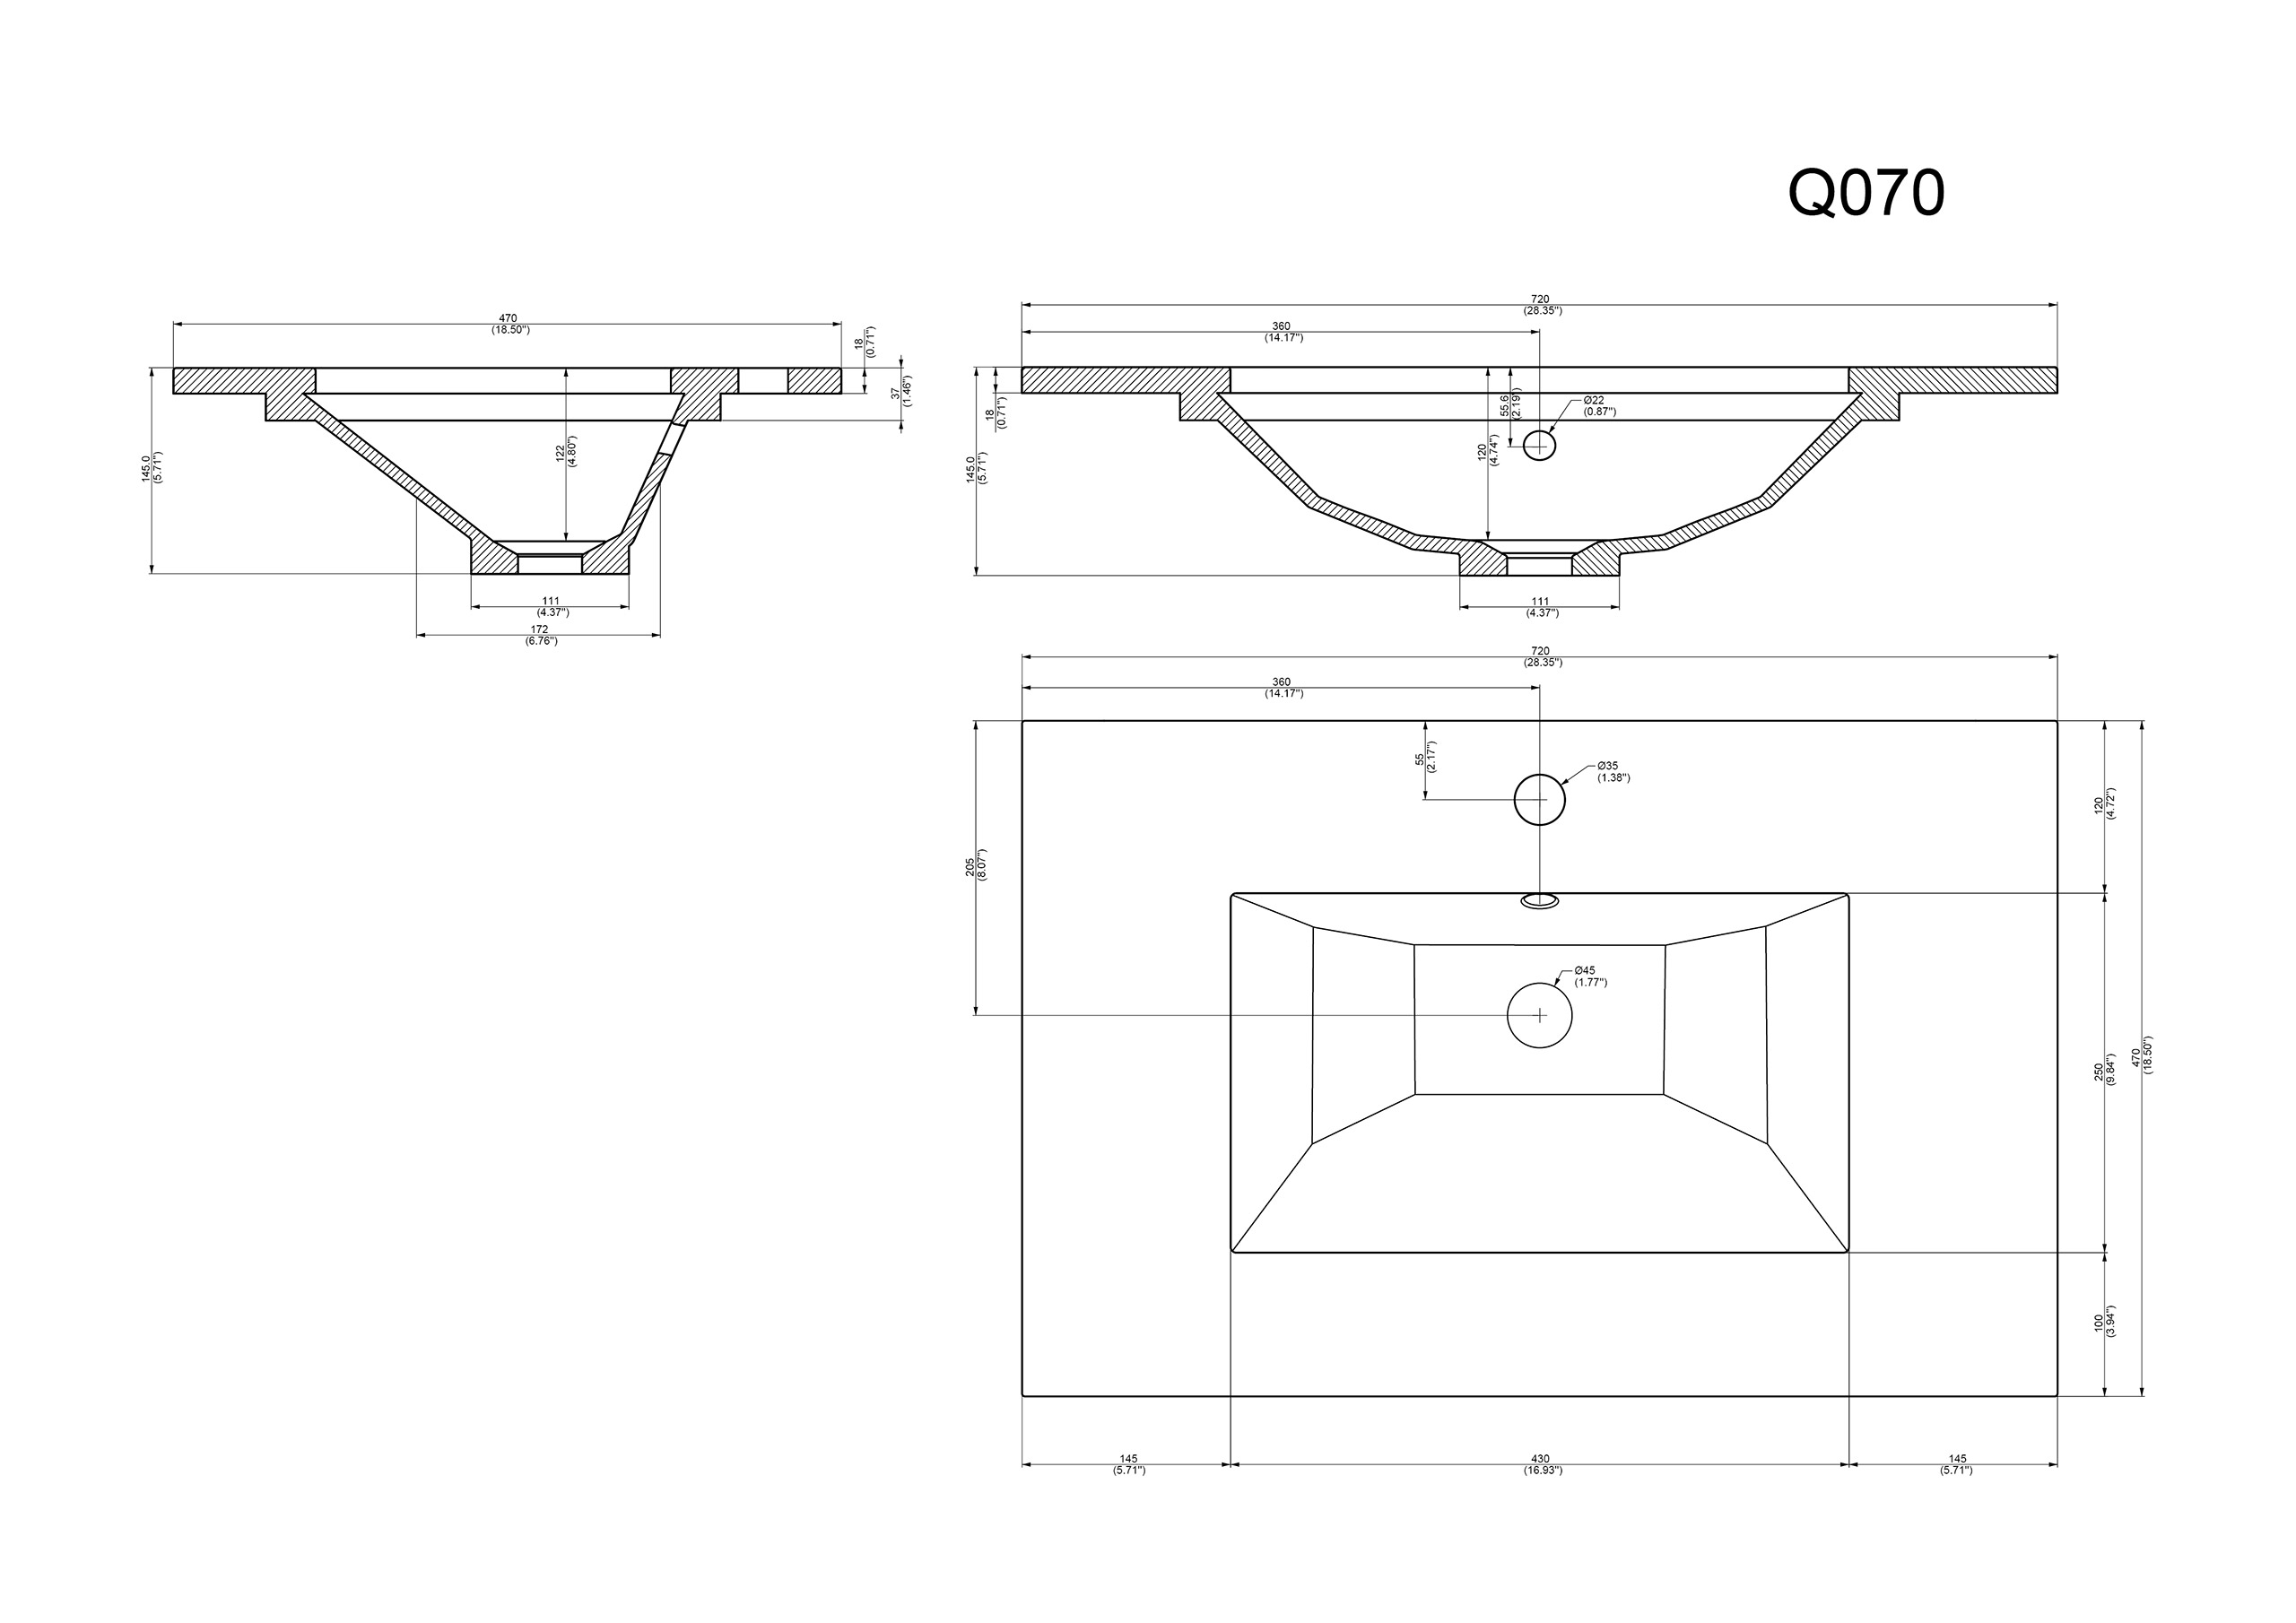 Badmöbel-Set Eton 700 Quarz Carrara 3tlg LED-Spiegel SoftClose weiss hochglanz